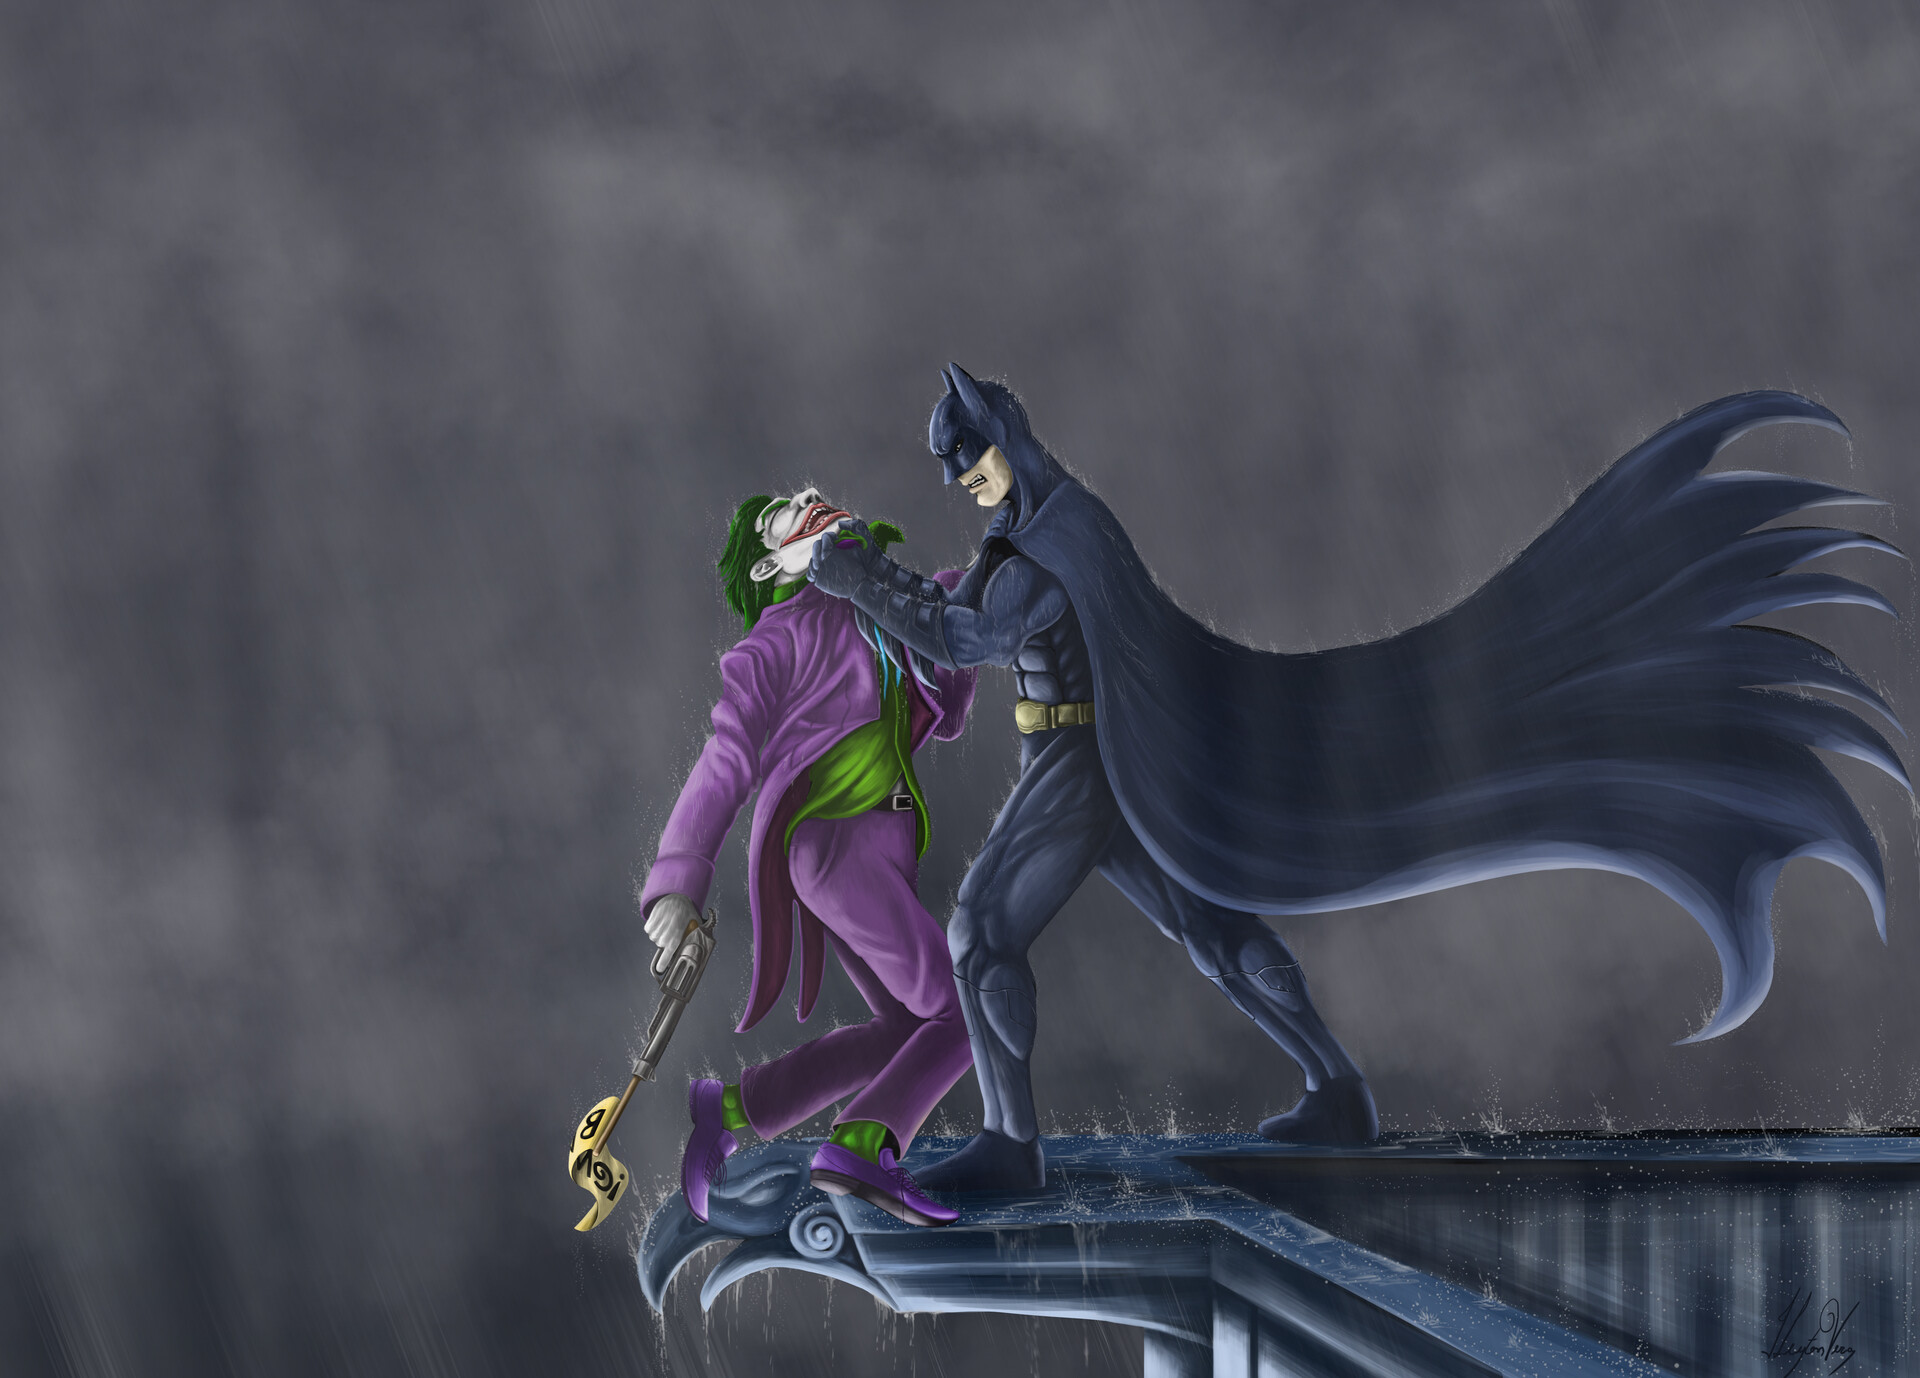 ArtStation - Batman vs joker